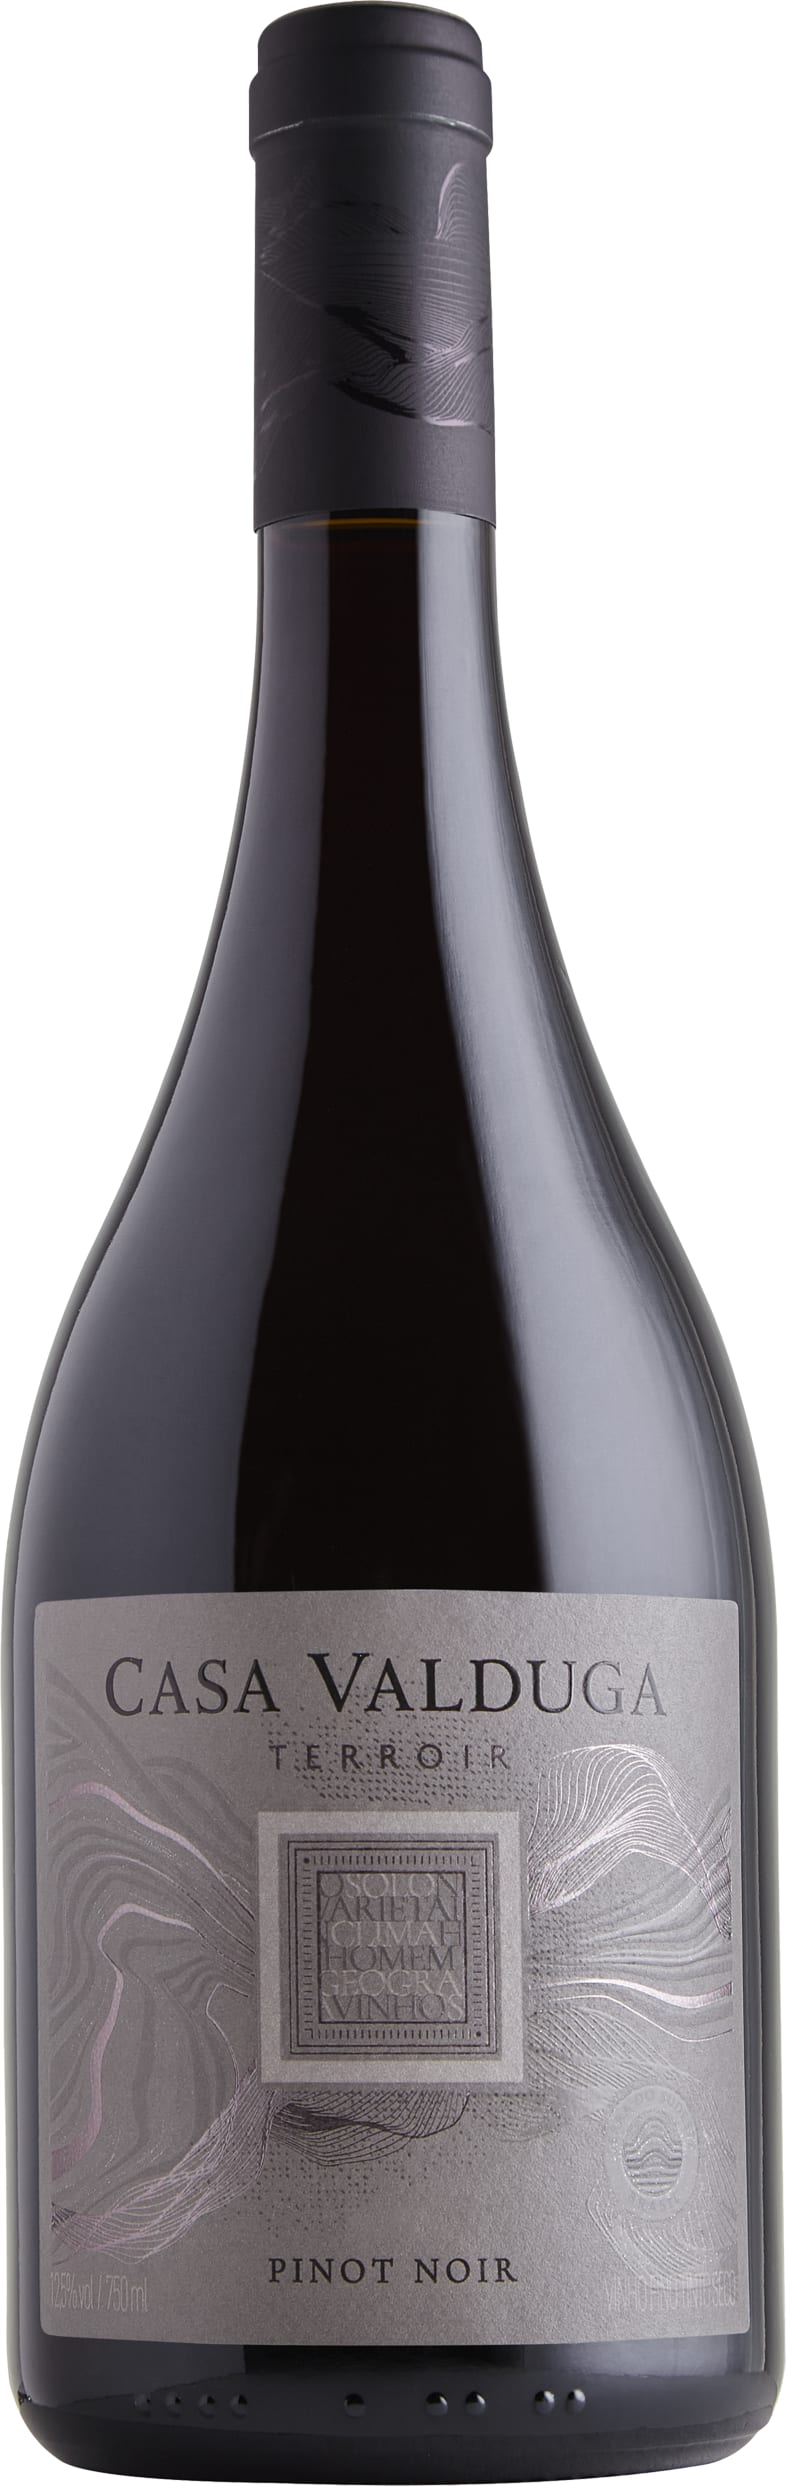 Casa Valduga Terrior Pinot Noir 2021 75cl - Buy Casa Valduga Wines from GREAT WINES DIRECT wine shop